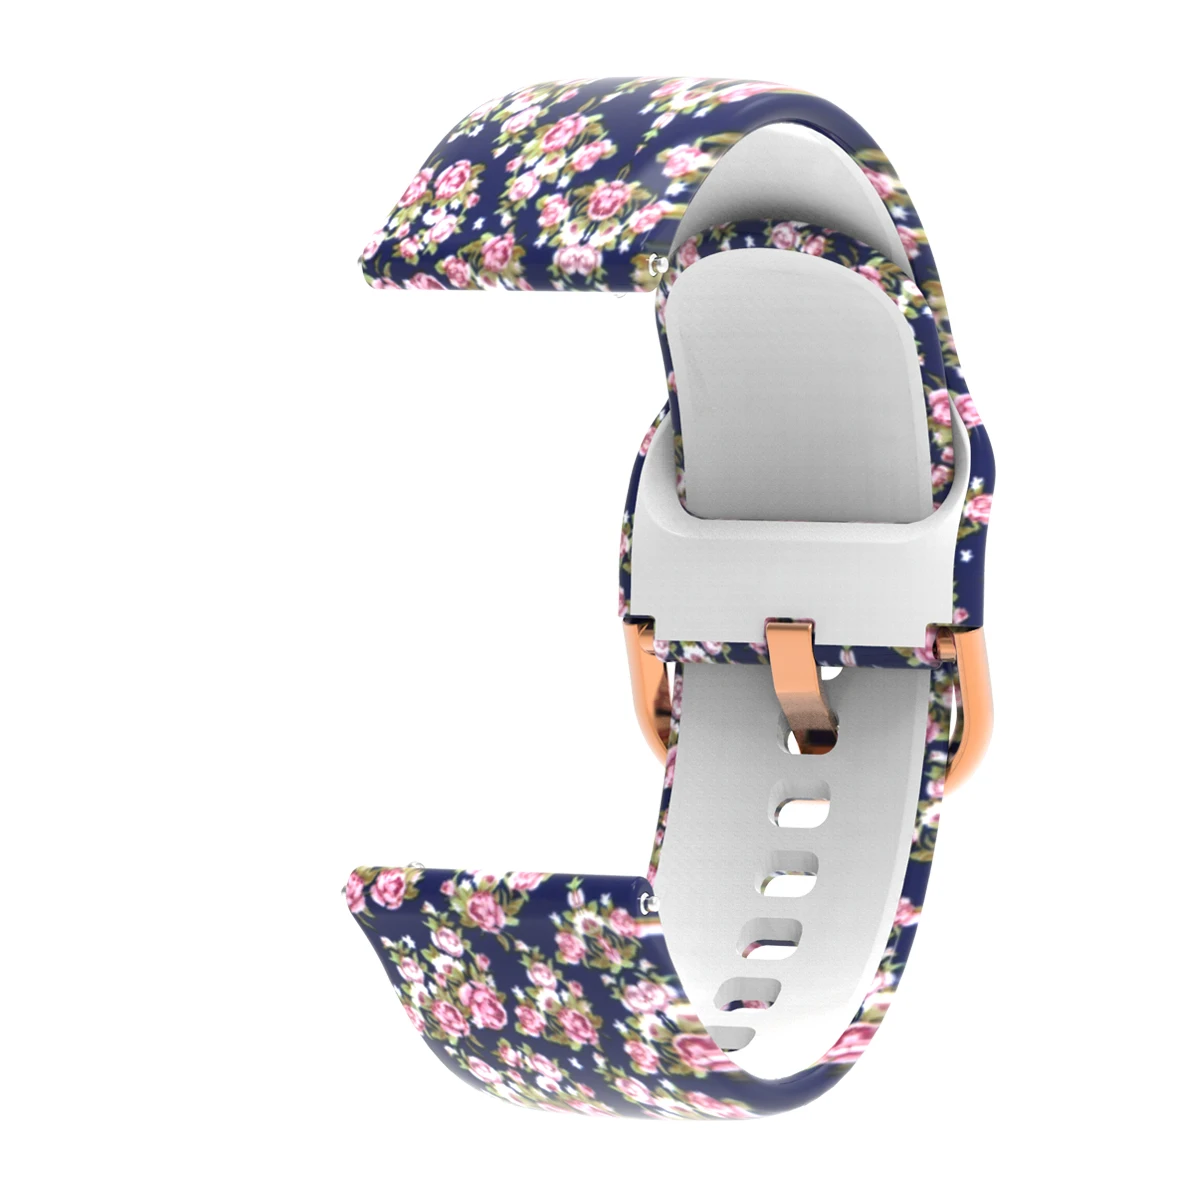 Fashion 20mm Camo Silicone Watch Strap Band For Garmin Vivoactive 3 Smart Watch Replacement Bracelet Wrist band strap girl Women